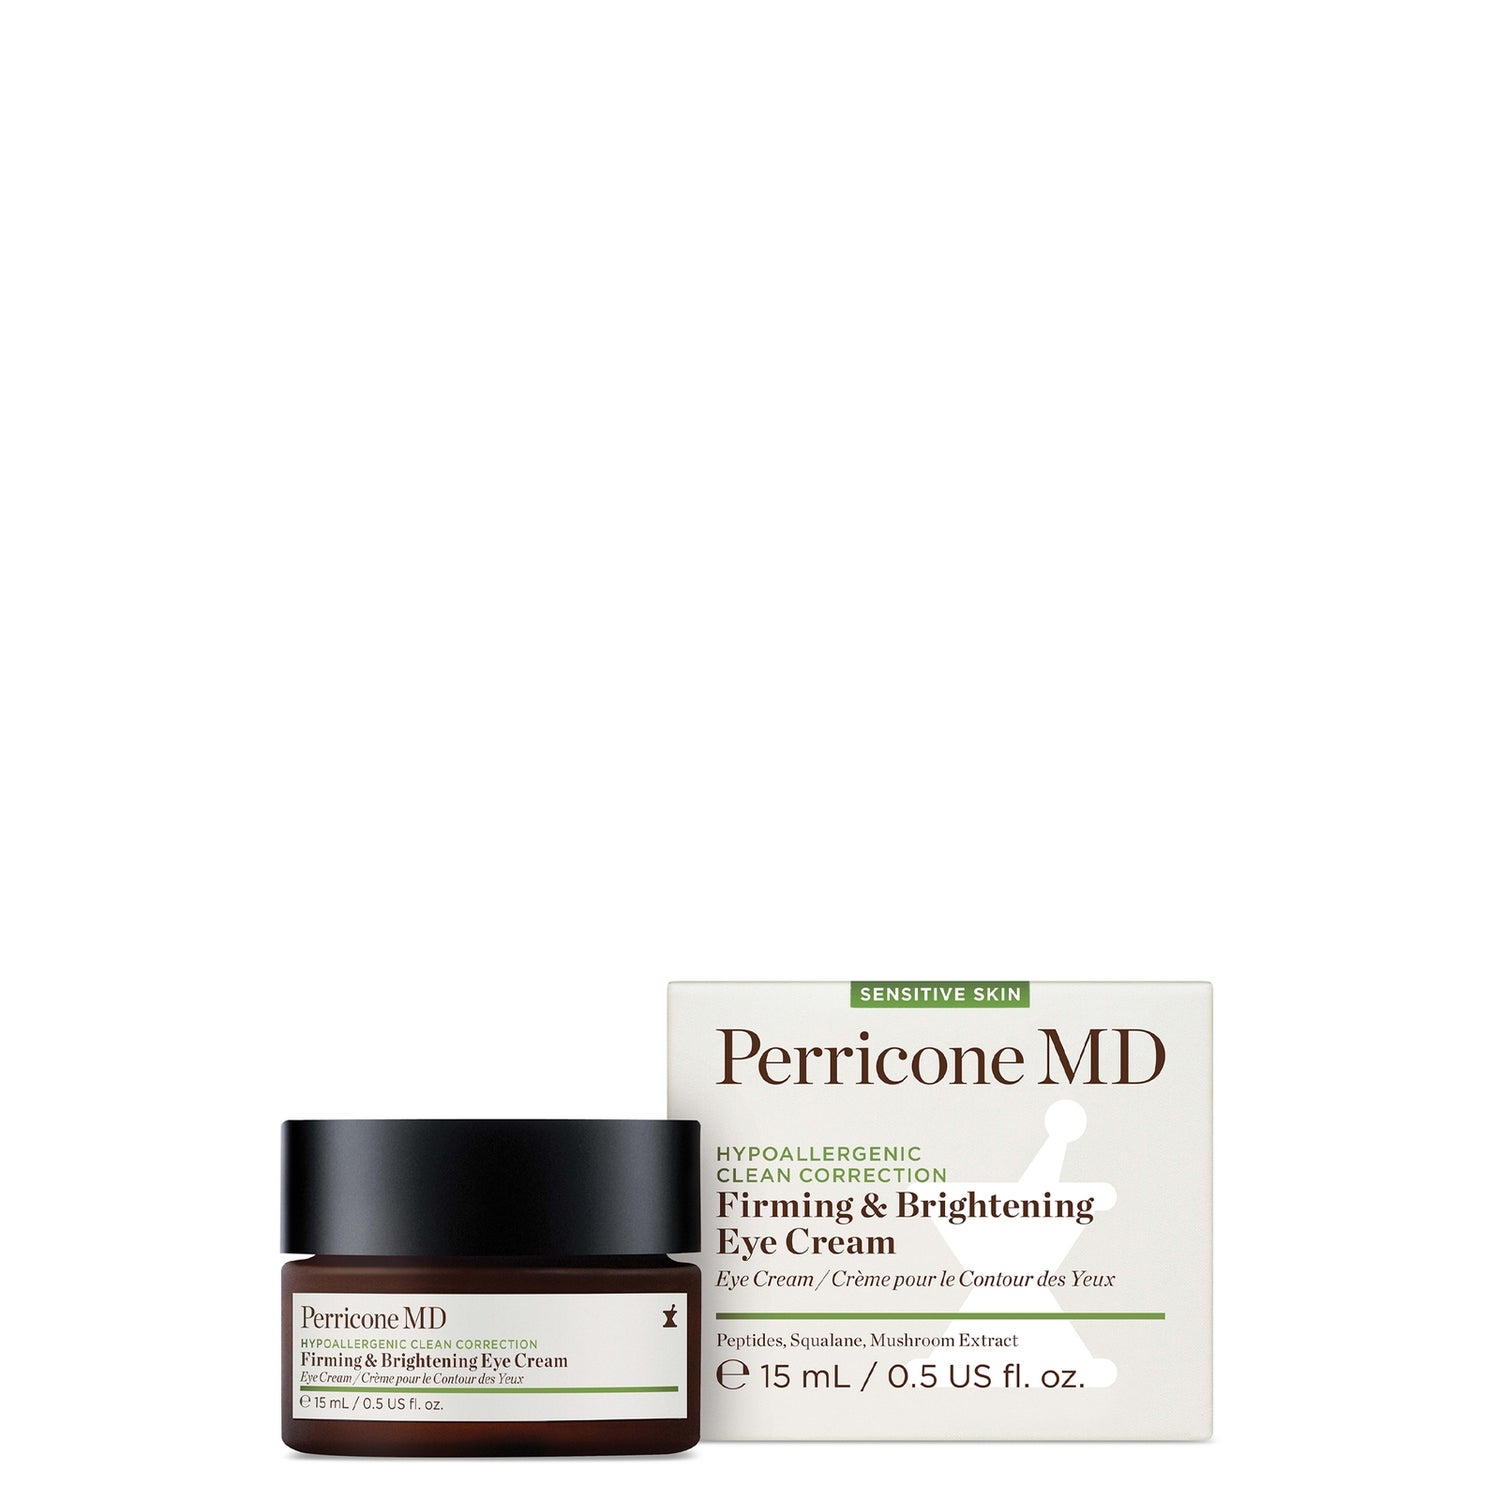 Perricone MD Hypoallergenic Clean Correction Firming Eye Cream 15ml